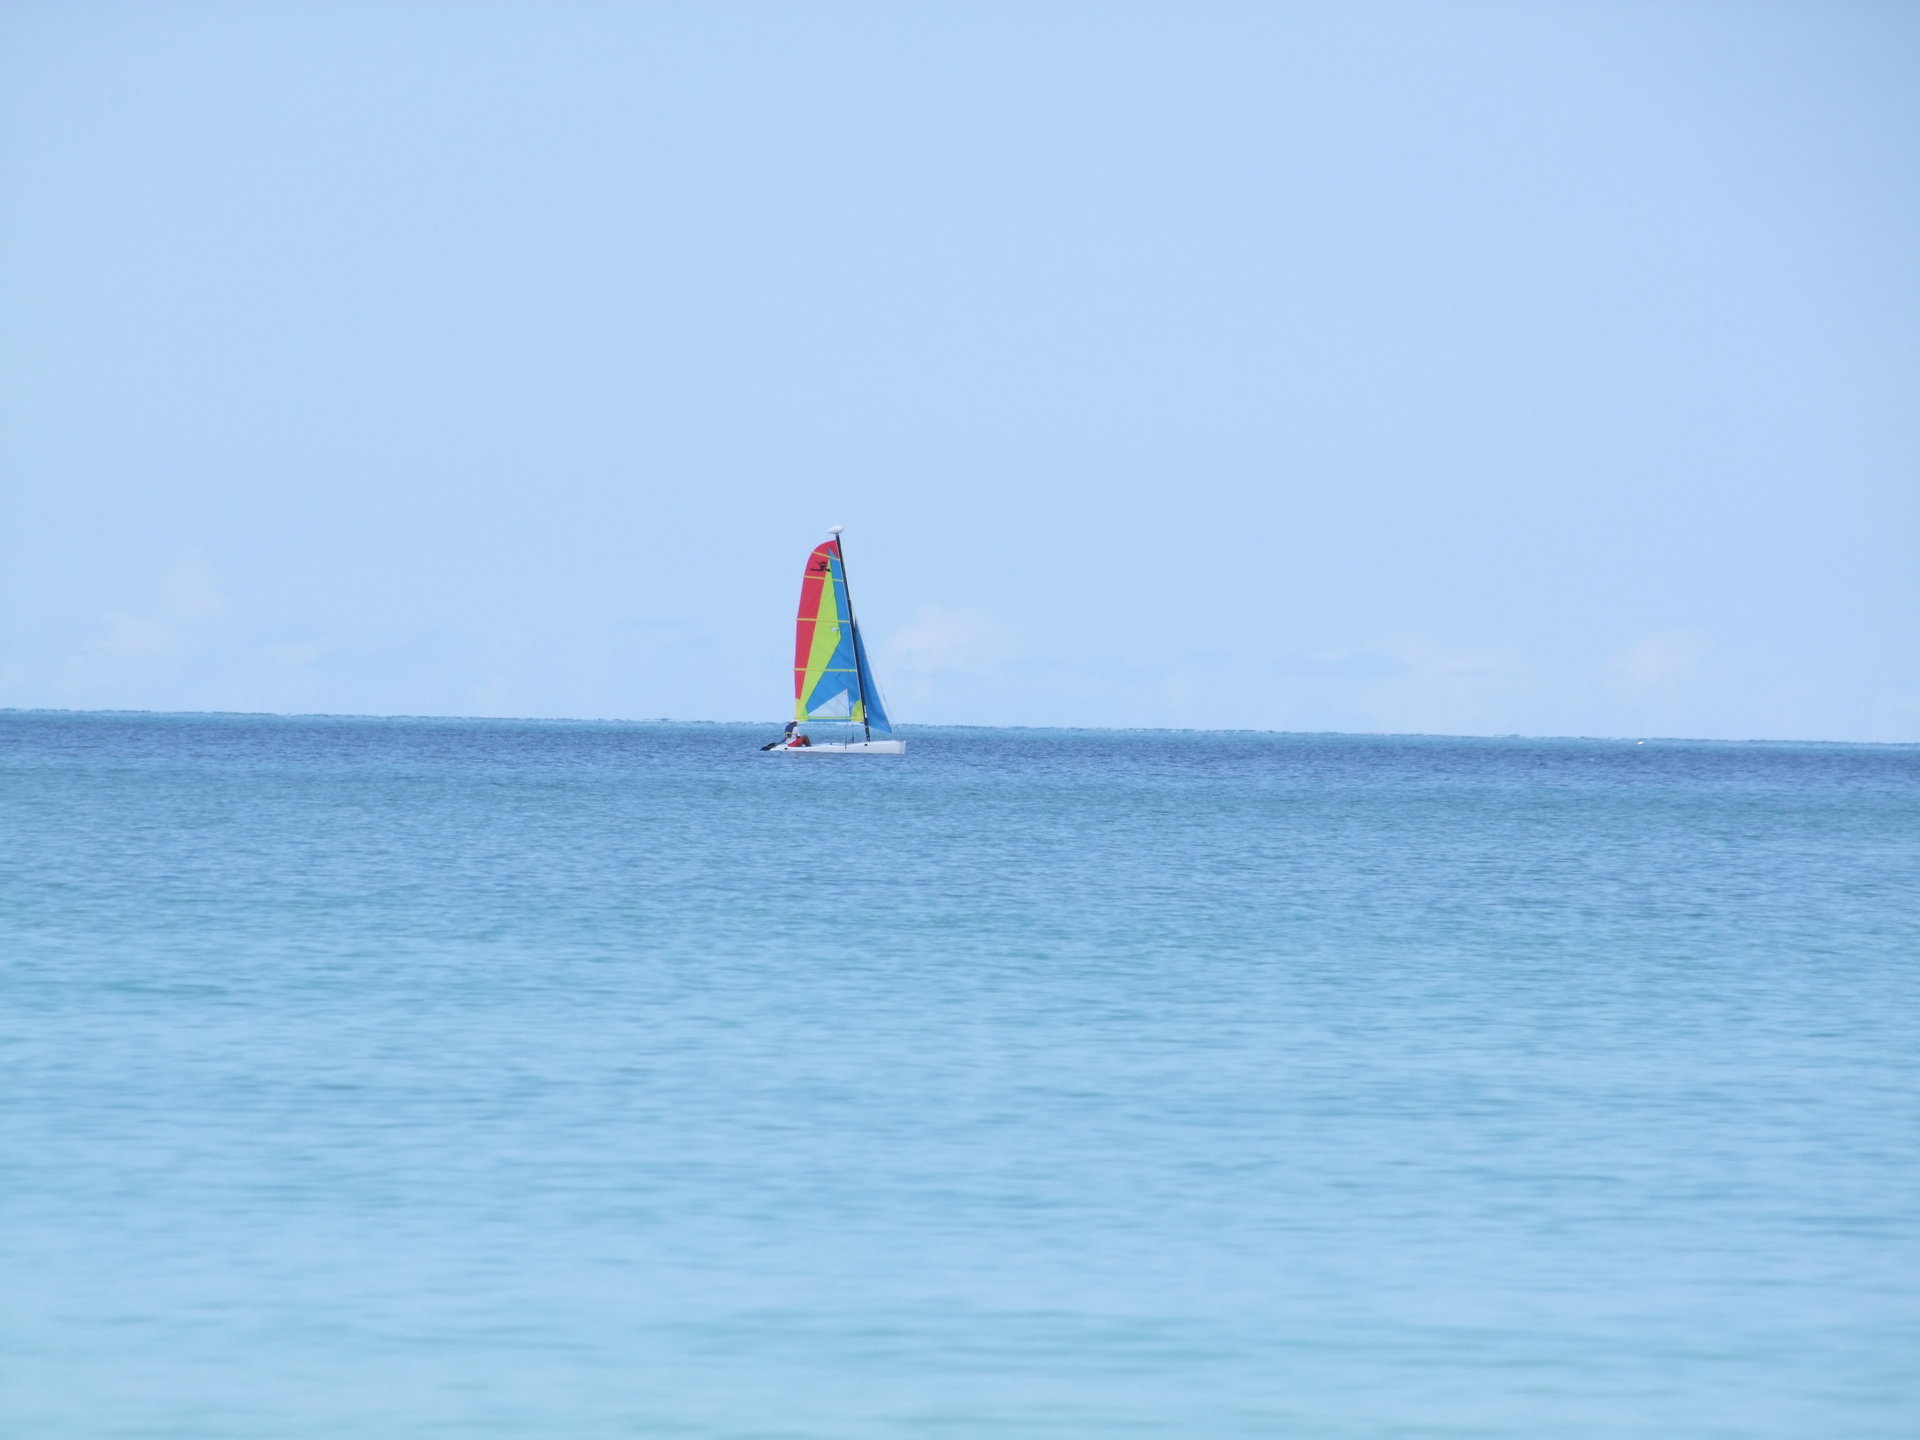 Sailing - Activities, Boat | Yacht | Sail | Sailor | Water | Sea | Ocean | Blue | Sky